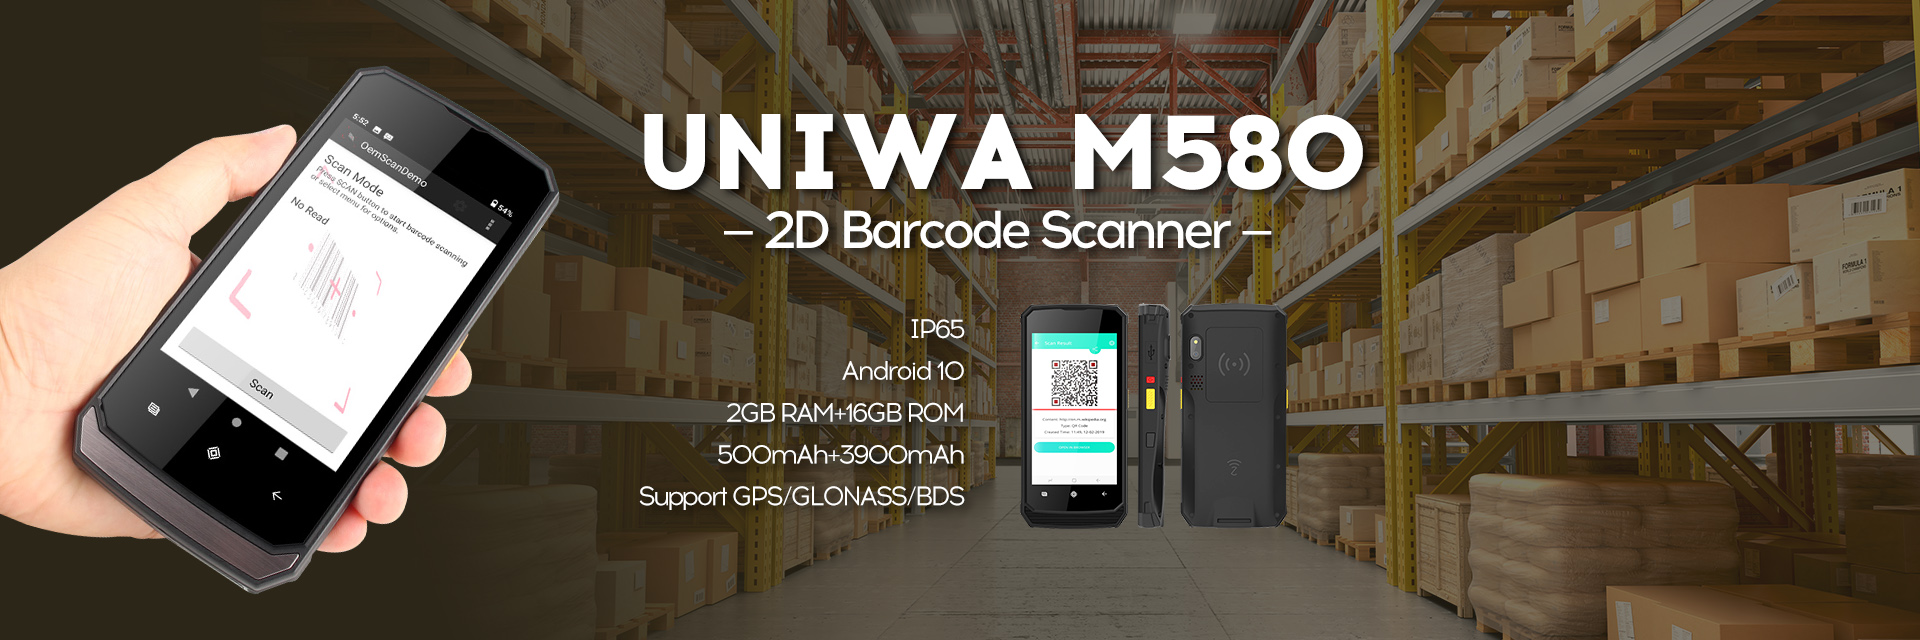 UNIWA M580 Barcode Scanner